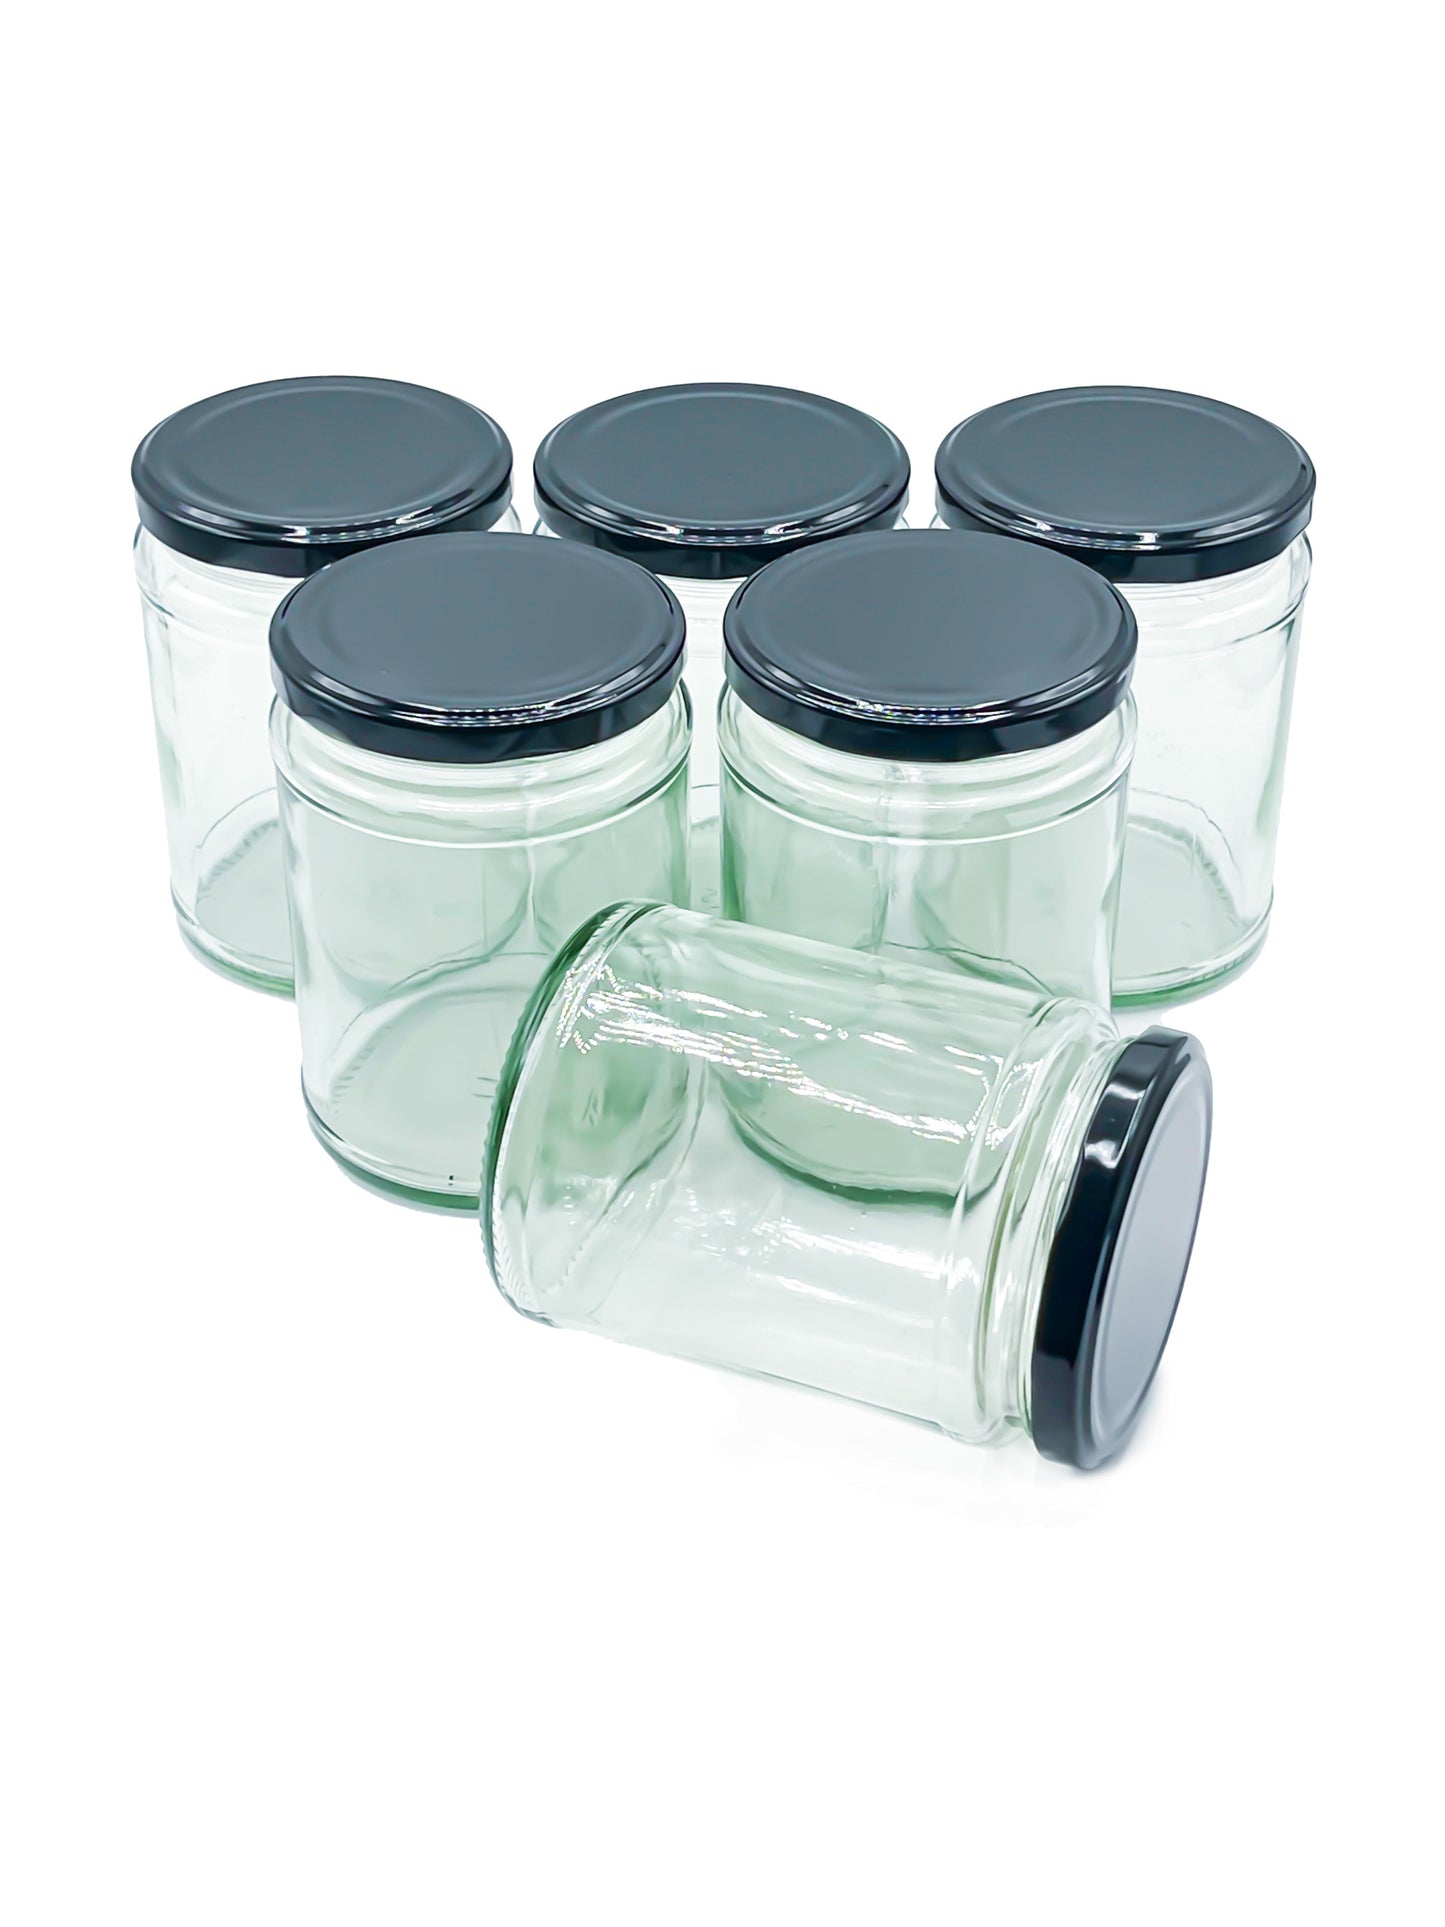 500ml Glass Jars Preserving Food Jars with Twist off Locking Black Lids - 24 Pack